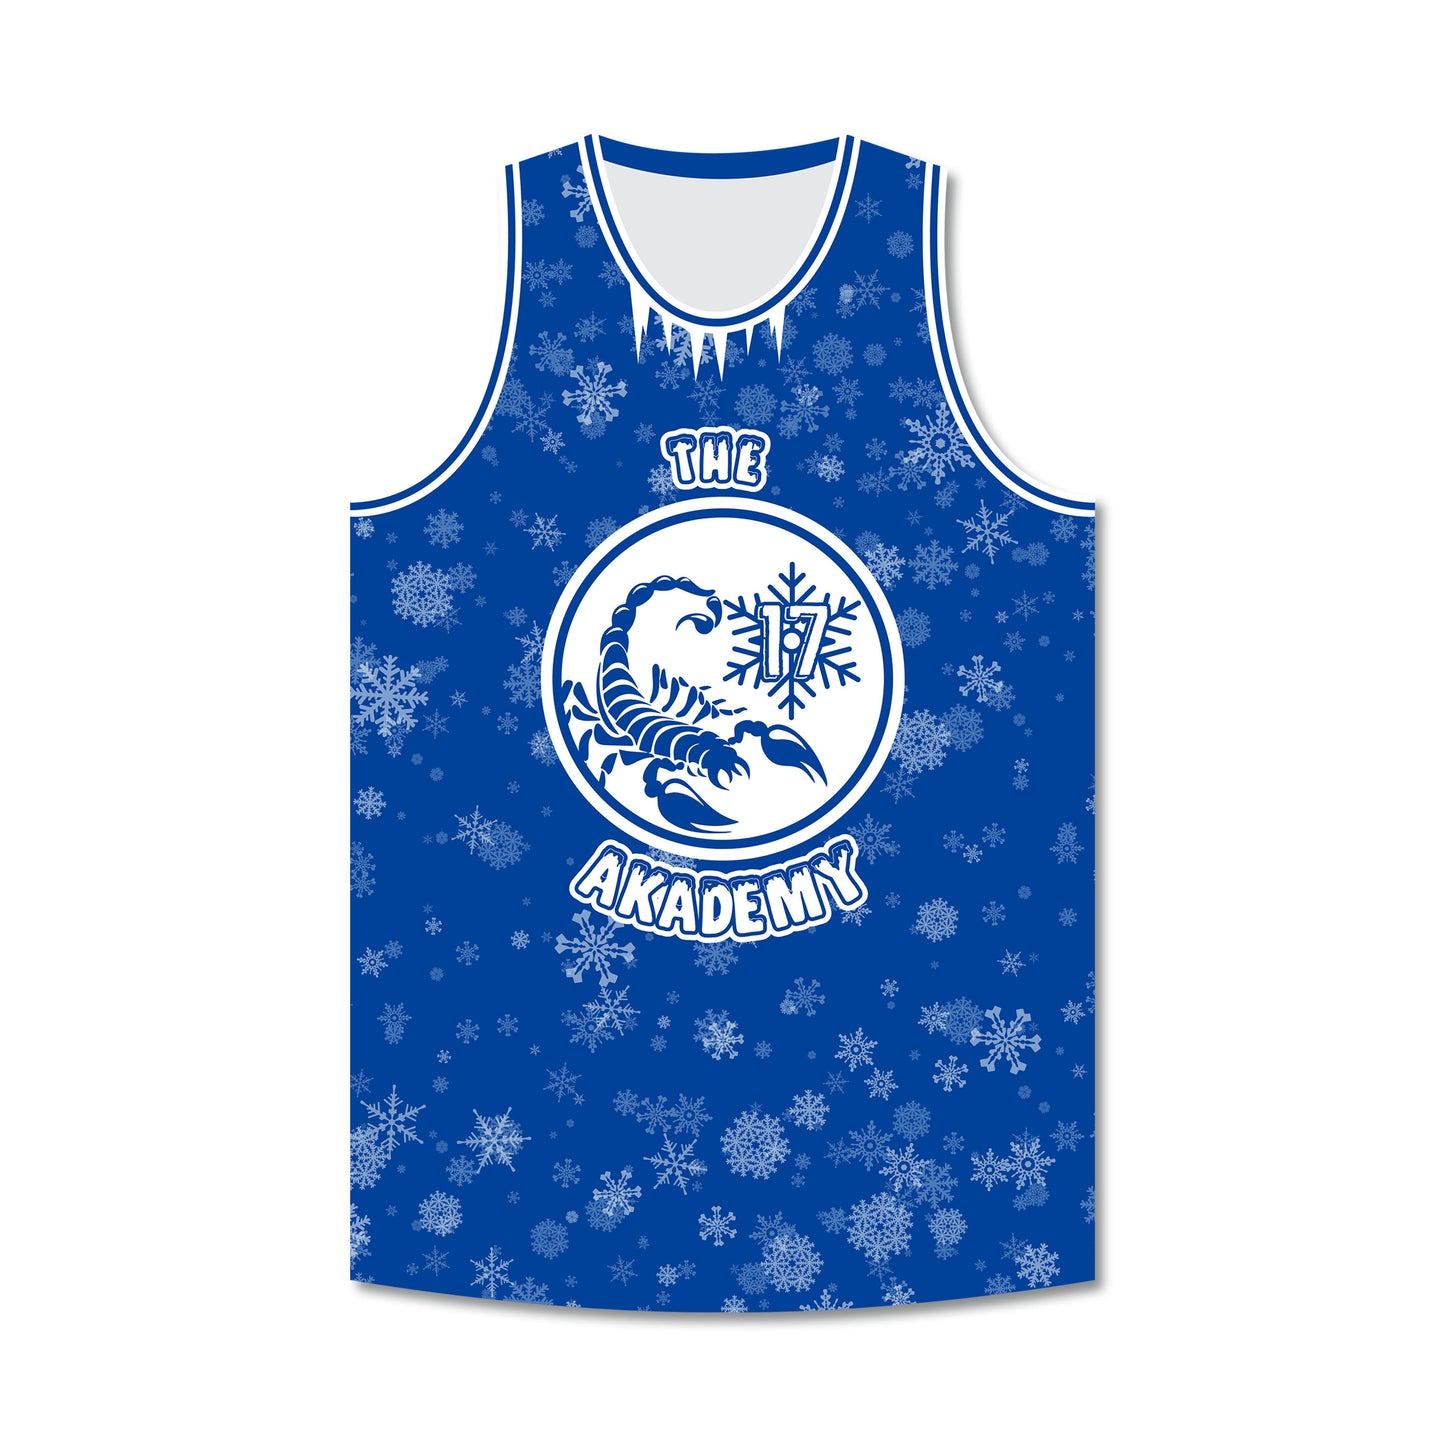 The Akademy Christmas Basketball Jersey